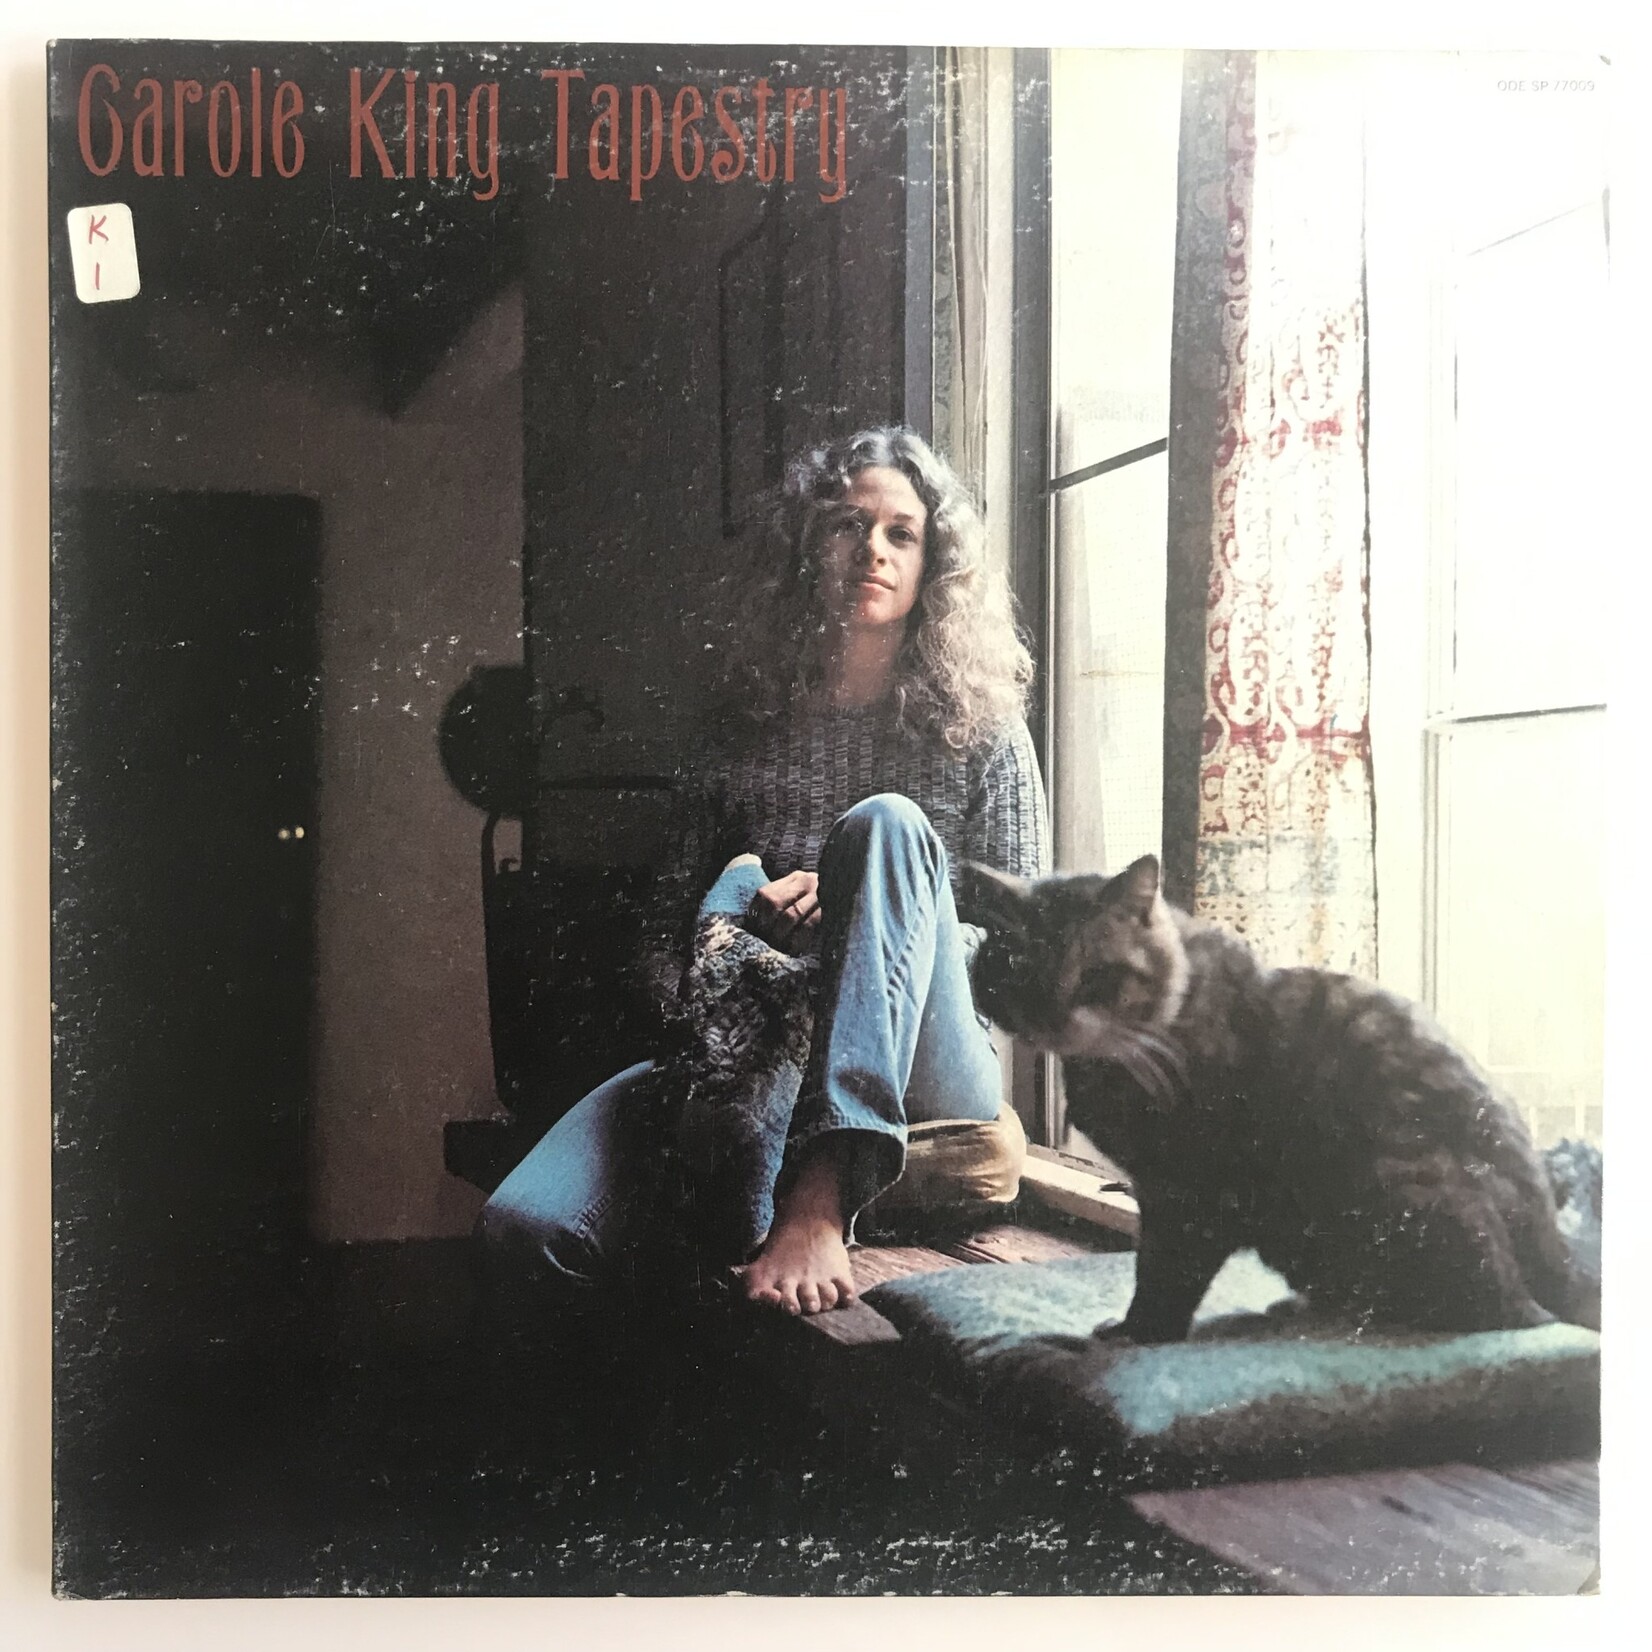 Carole King - Tapestry - ODE SP 77009 - Vinyl LP (USED)